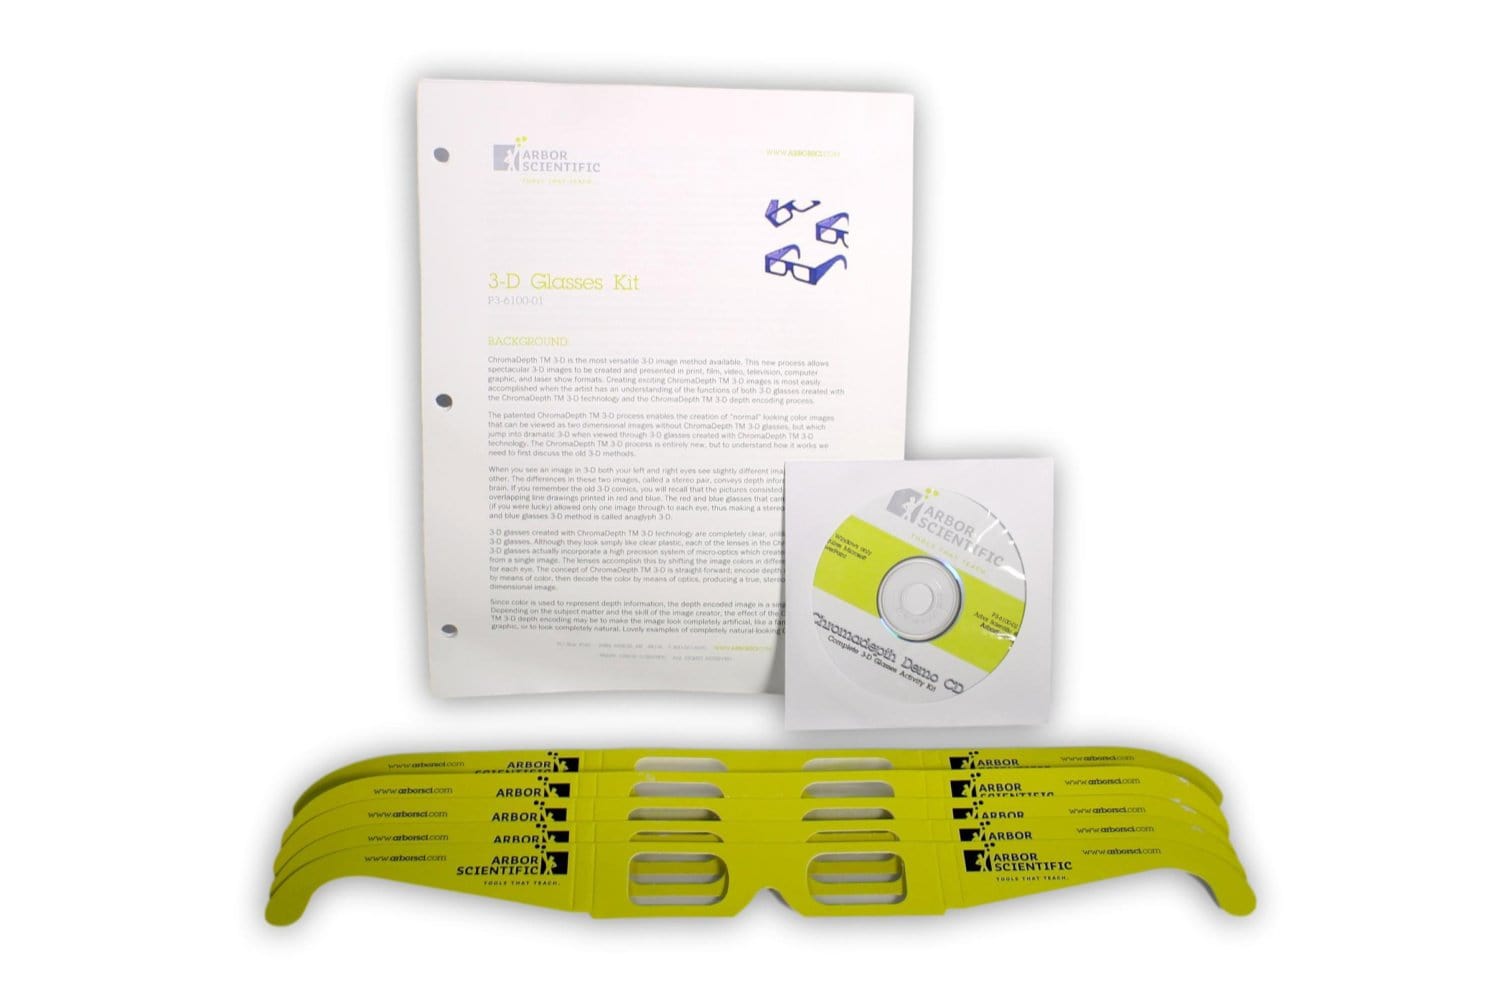 Arbor Scientific Complete 3-D Glasses Activity Kit